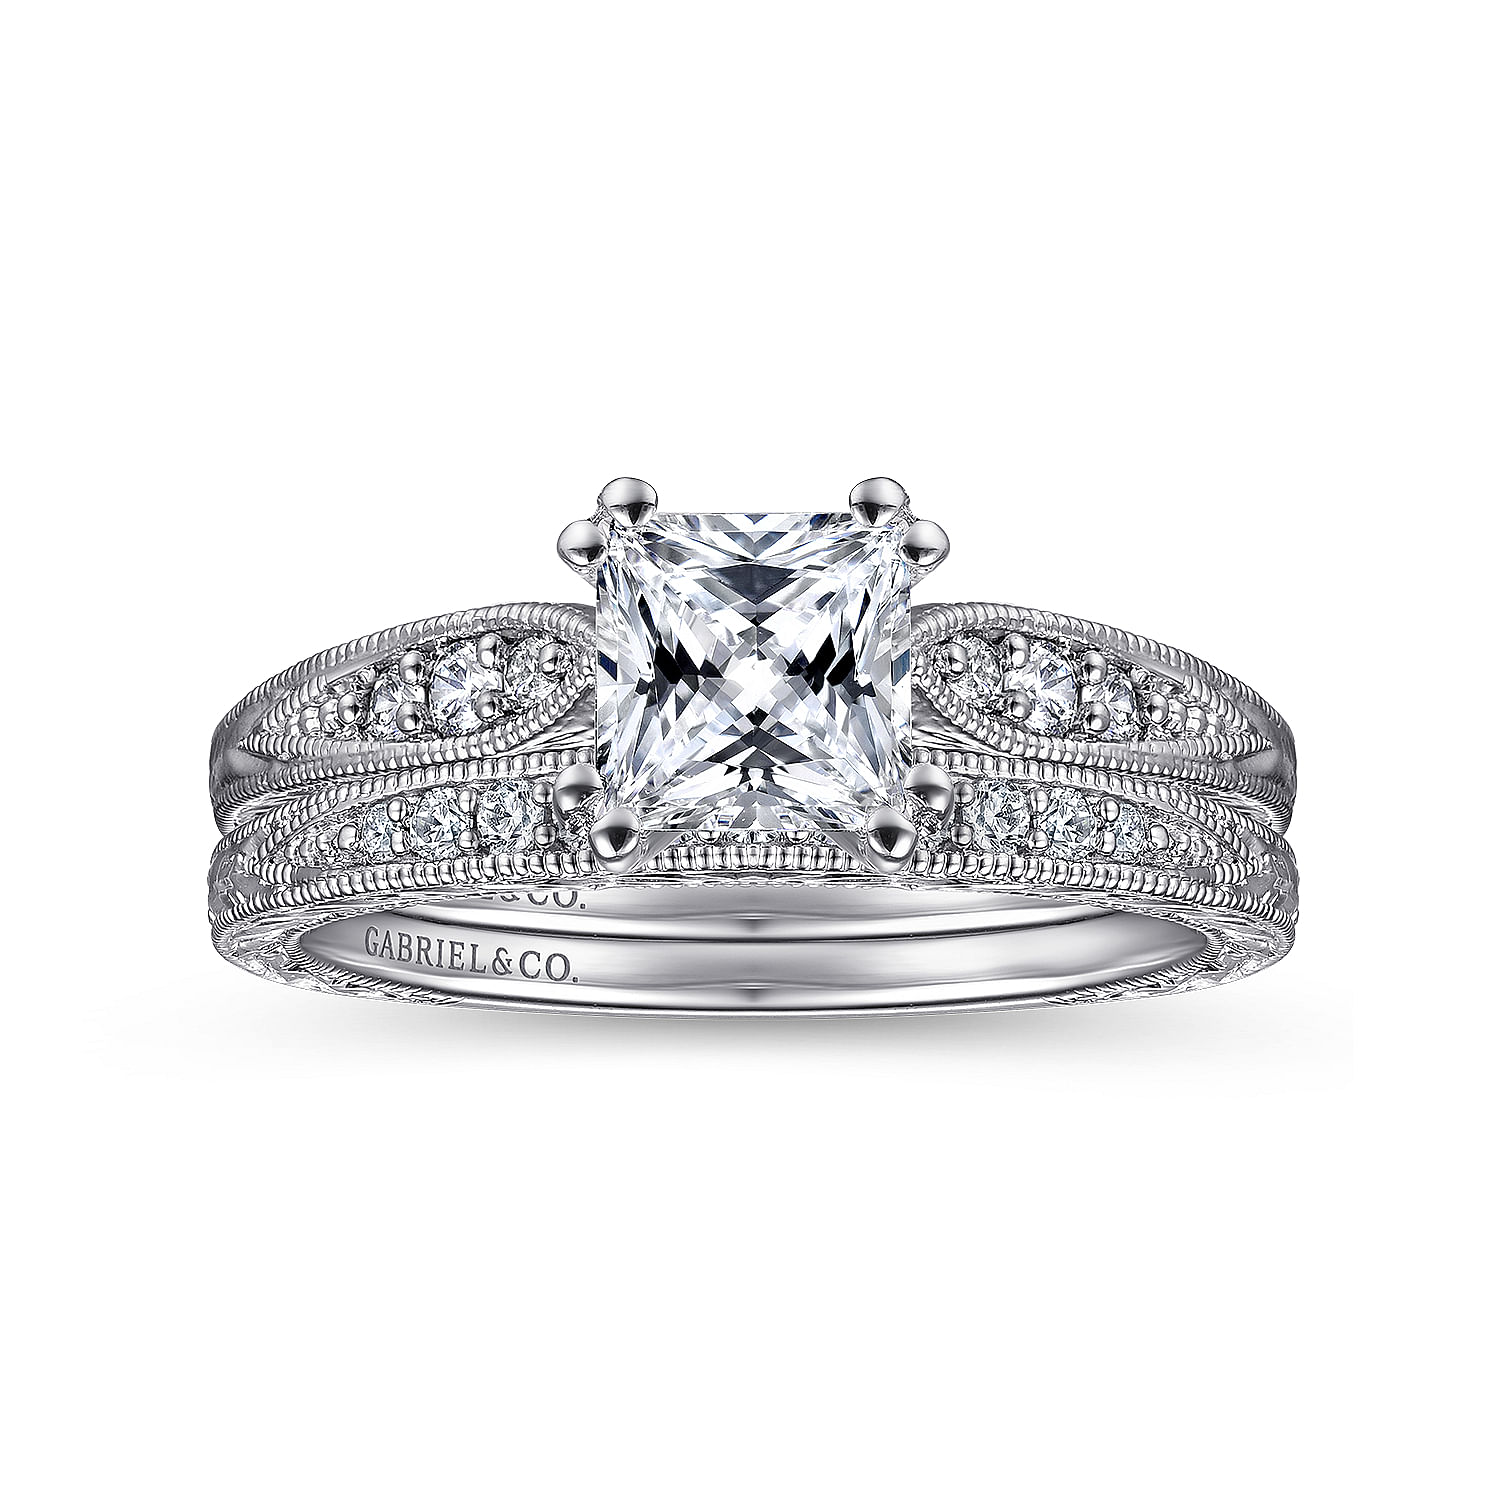 Vintage Inspired 14K White Gold Princess Cut Diamond Engagement Ring